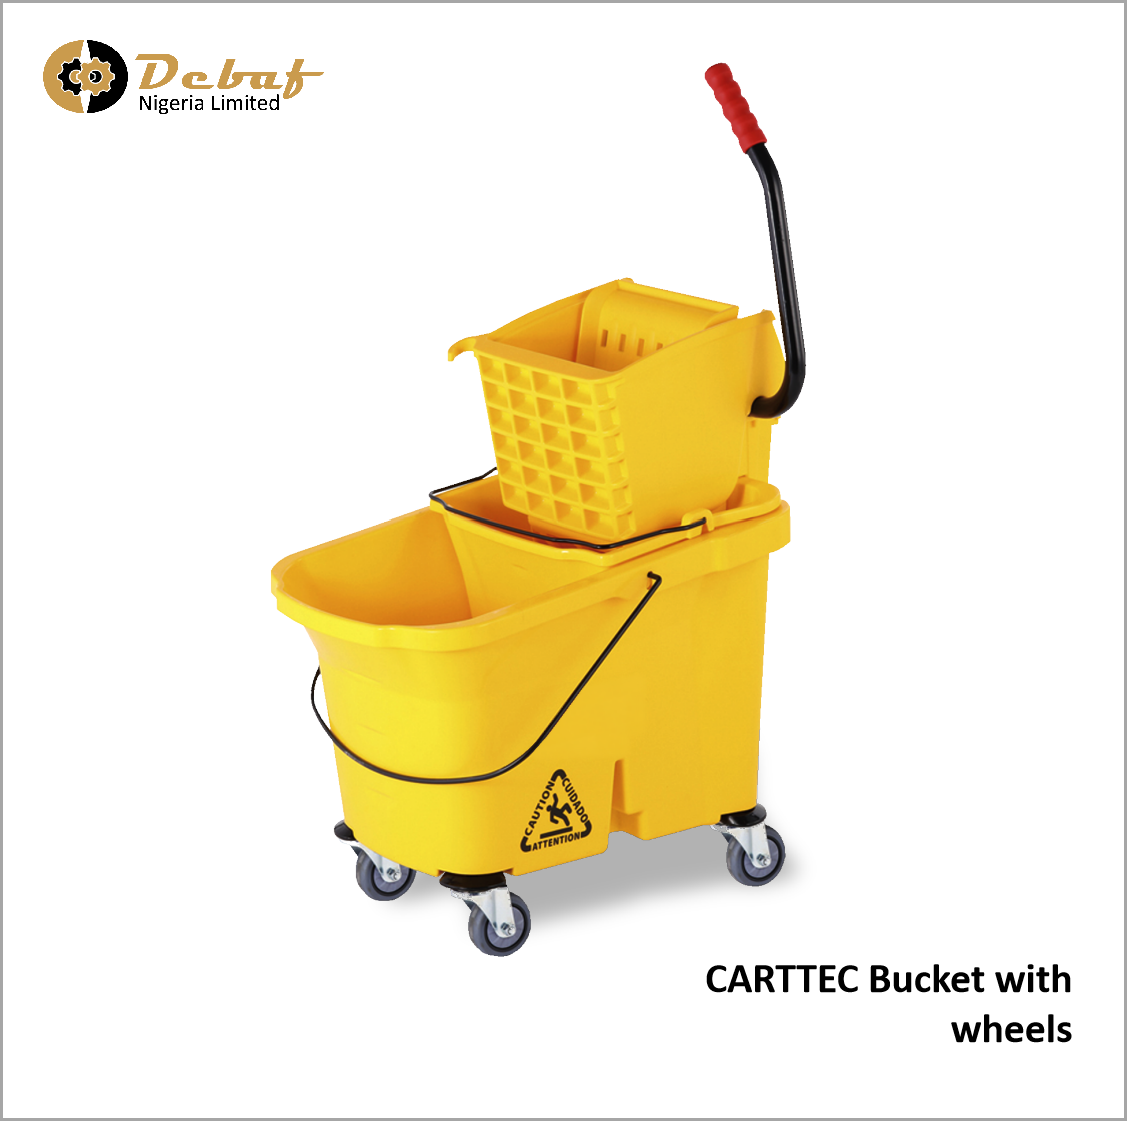 Debaf - CARTTEC Bucket with wheels